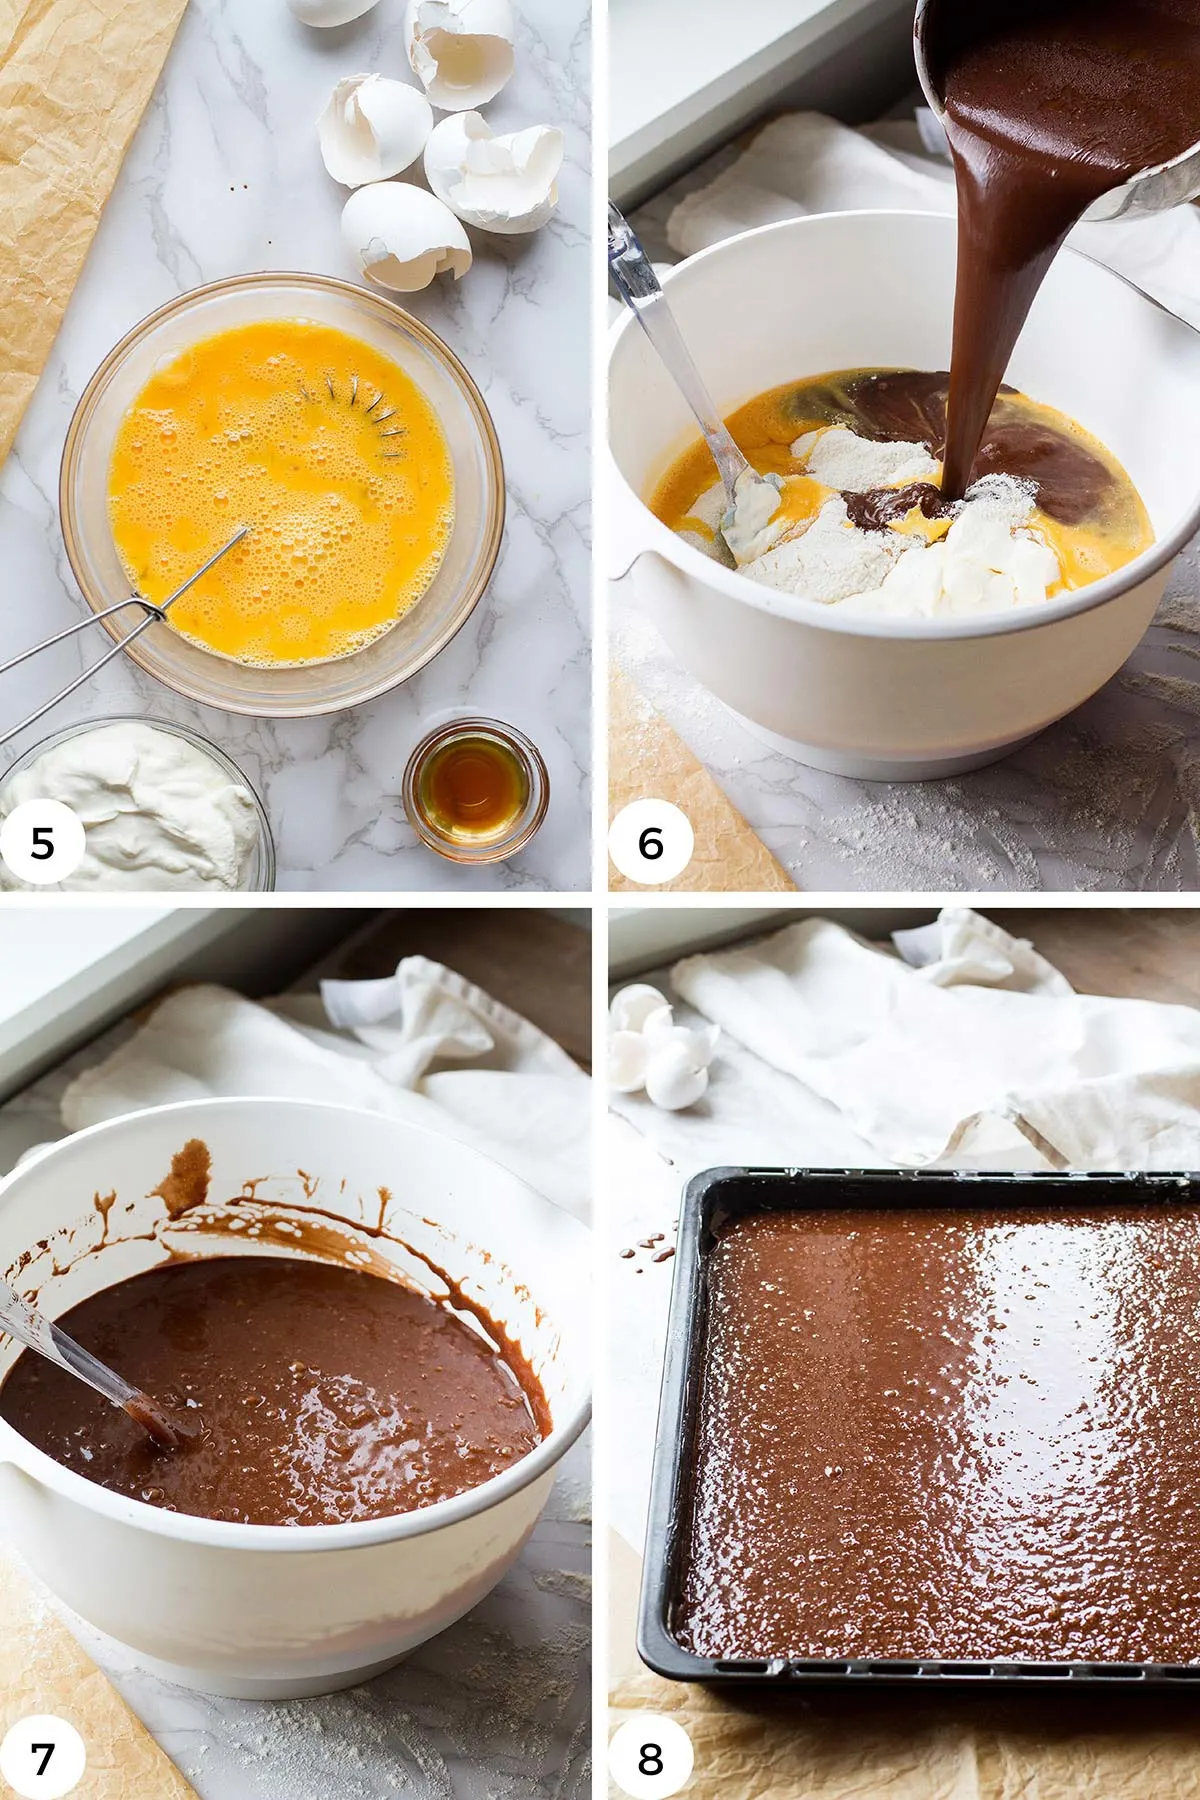 Steps to make chocolate cake batter.